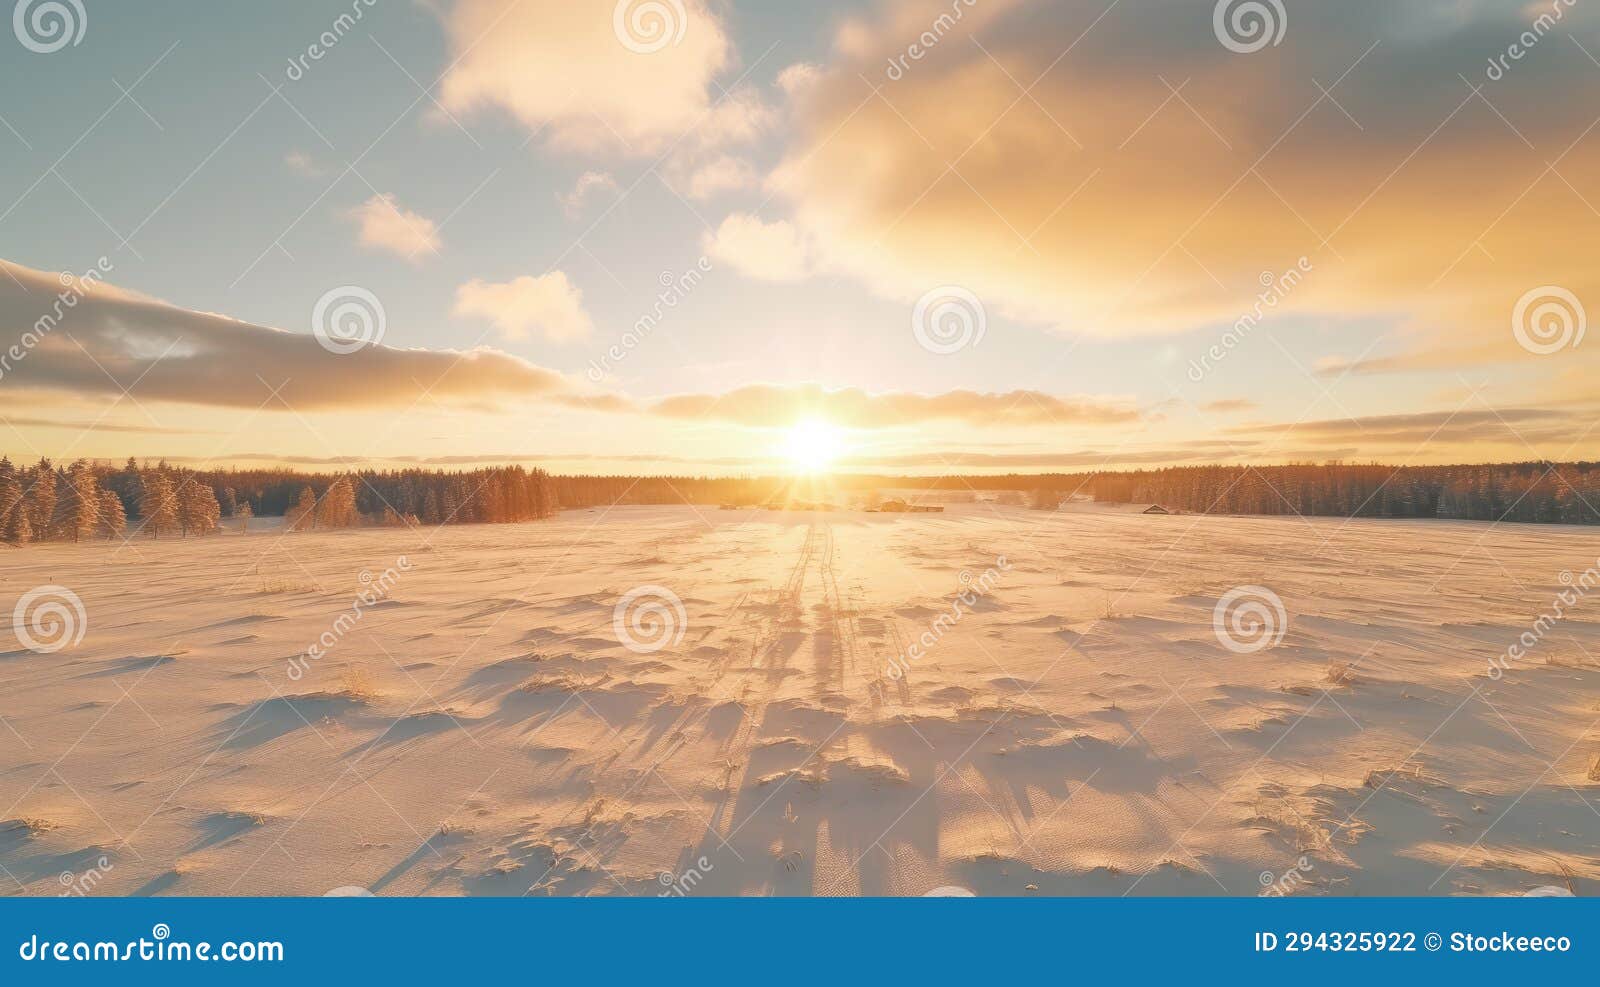 winter sunrise: scenic snow field with setting sun